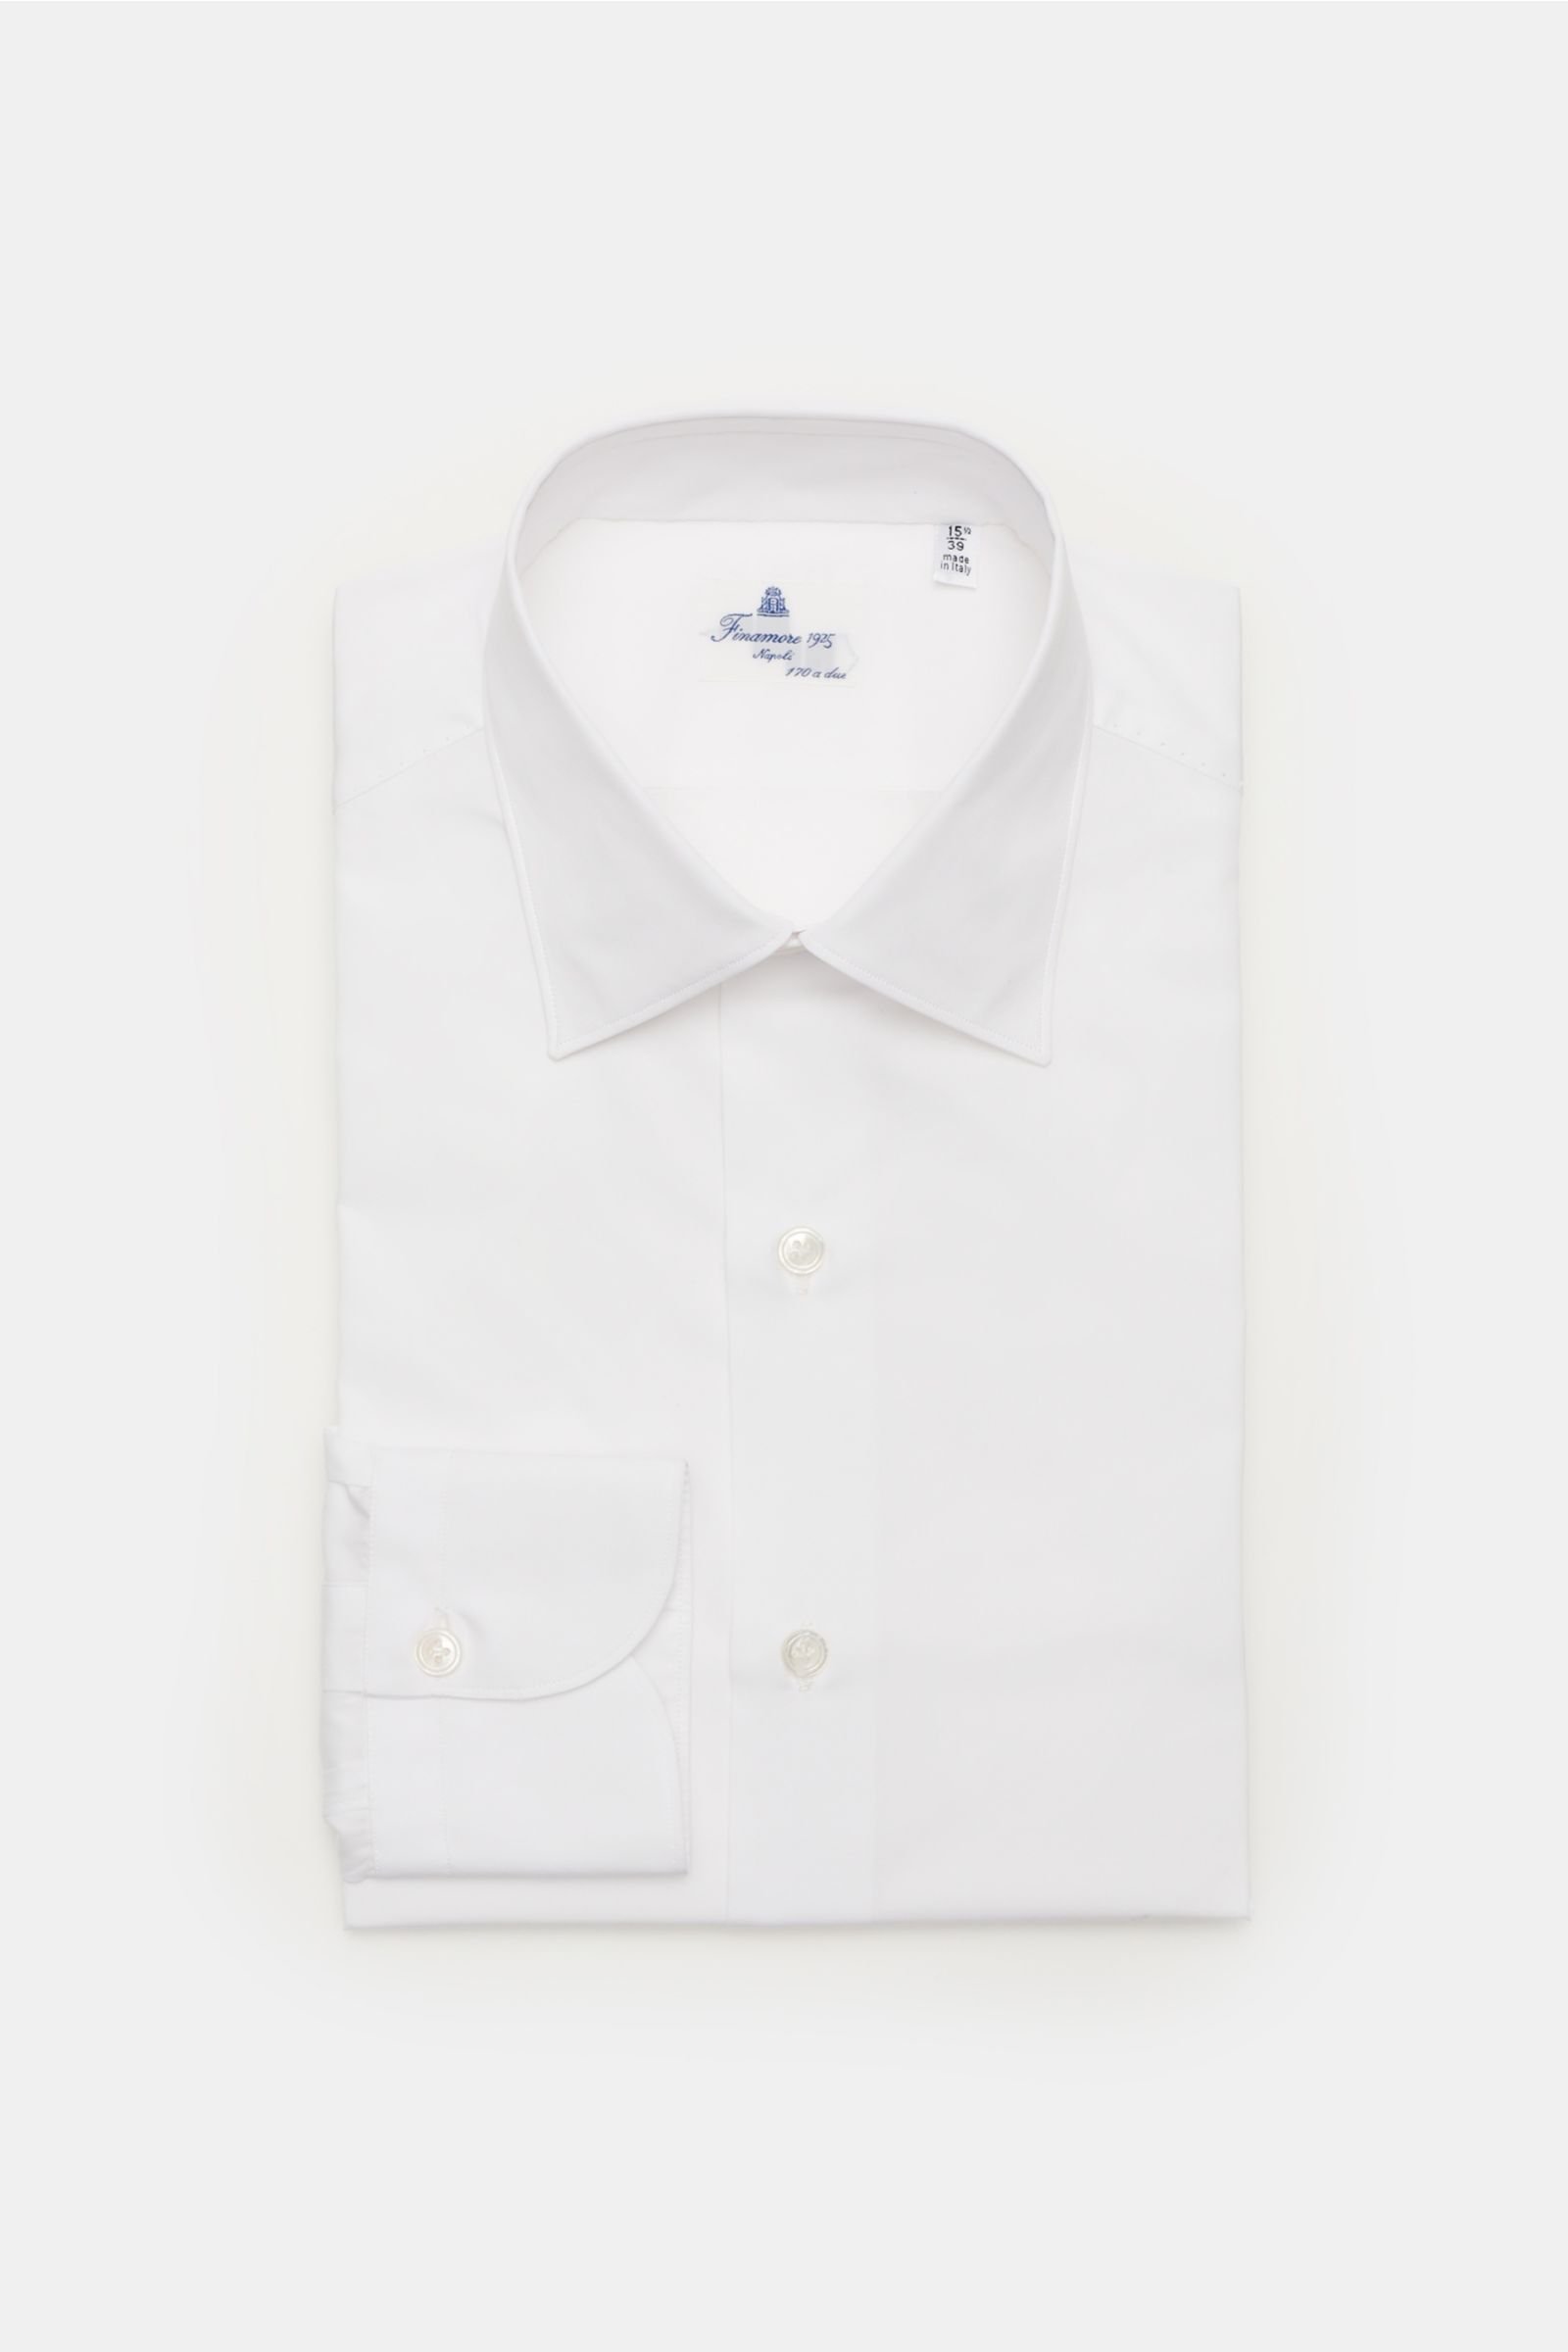 Business shirt 'Rodi Milano' New Kent collar white